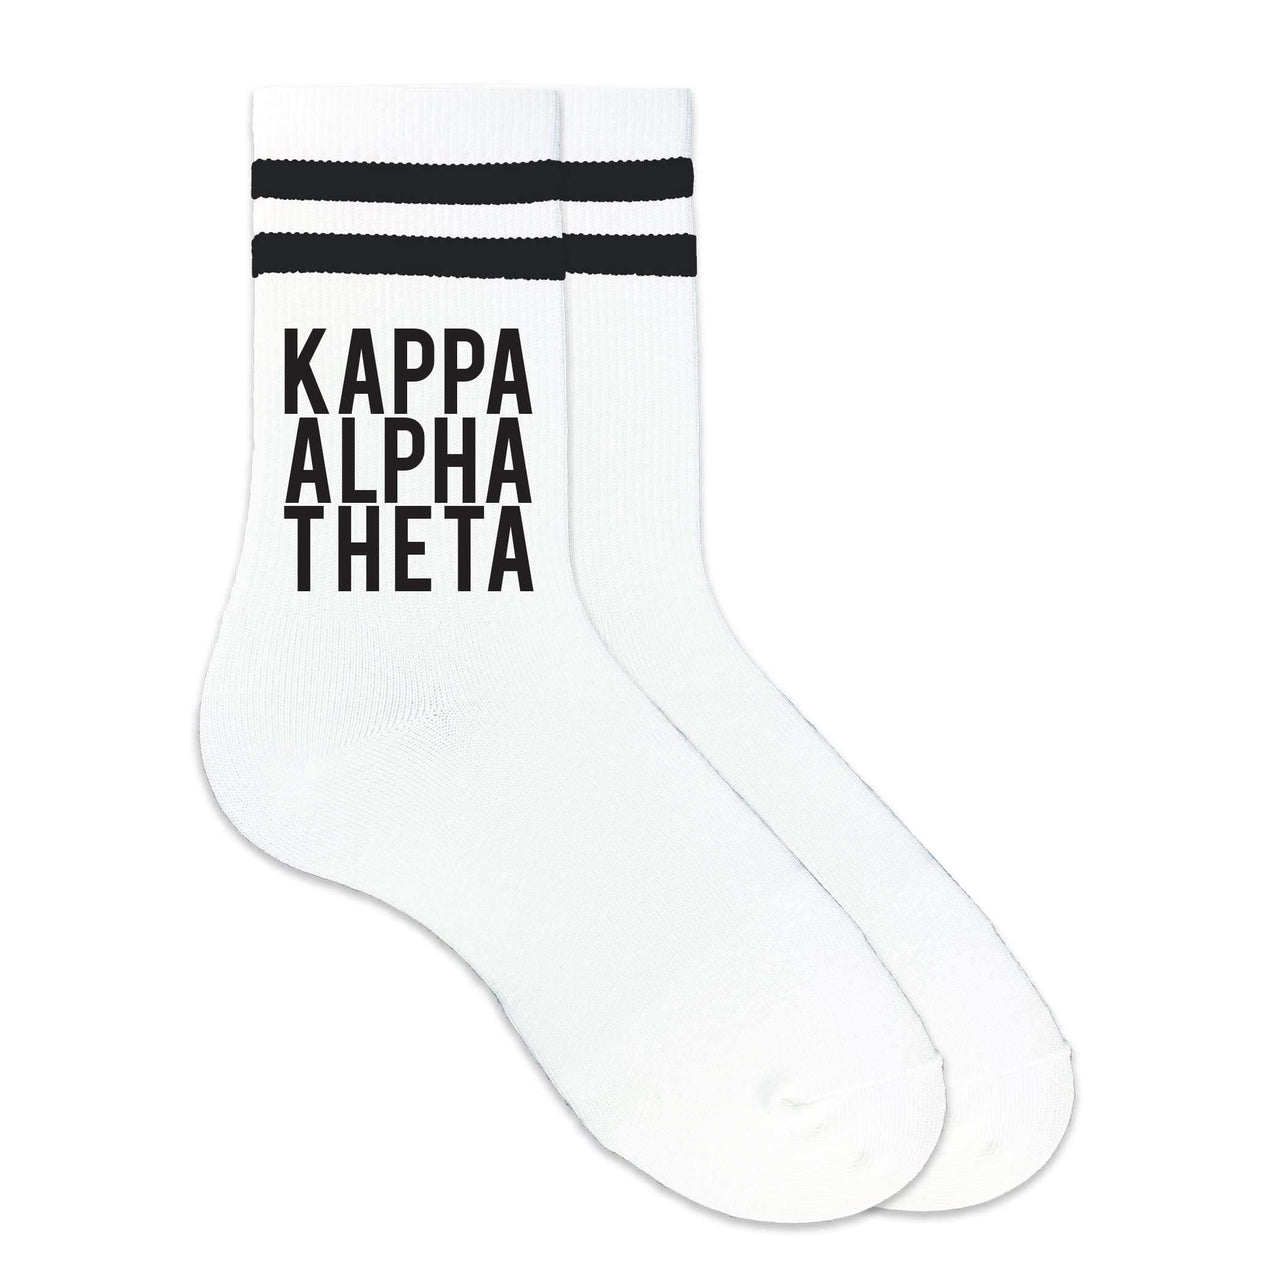 Kappa Alpha Theta sorority name custom printed on black striped crew socks